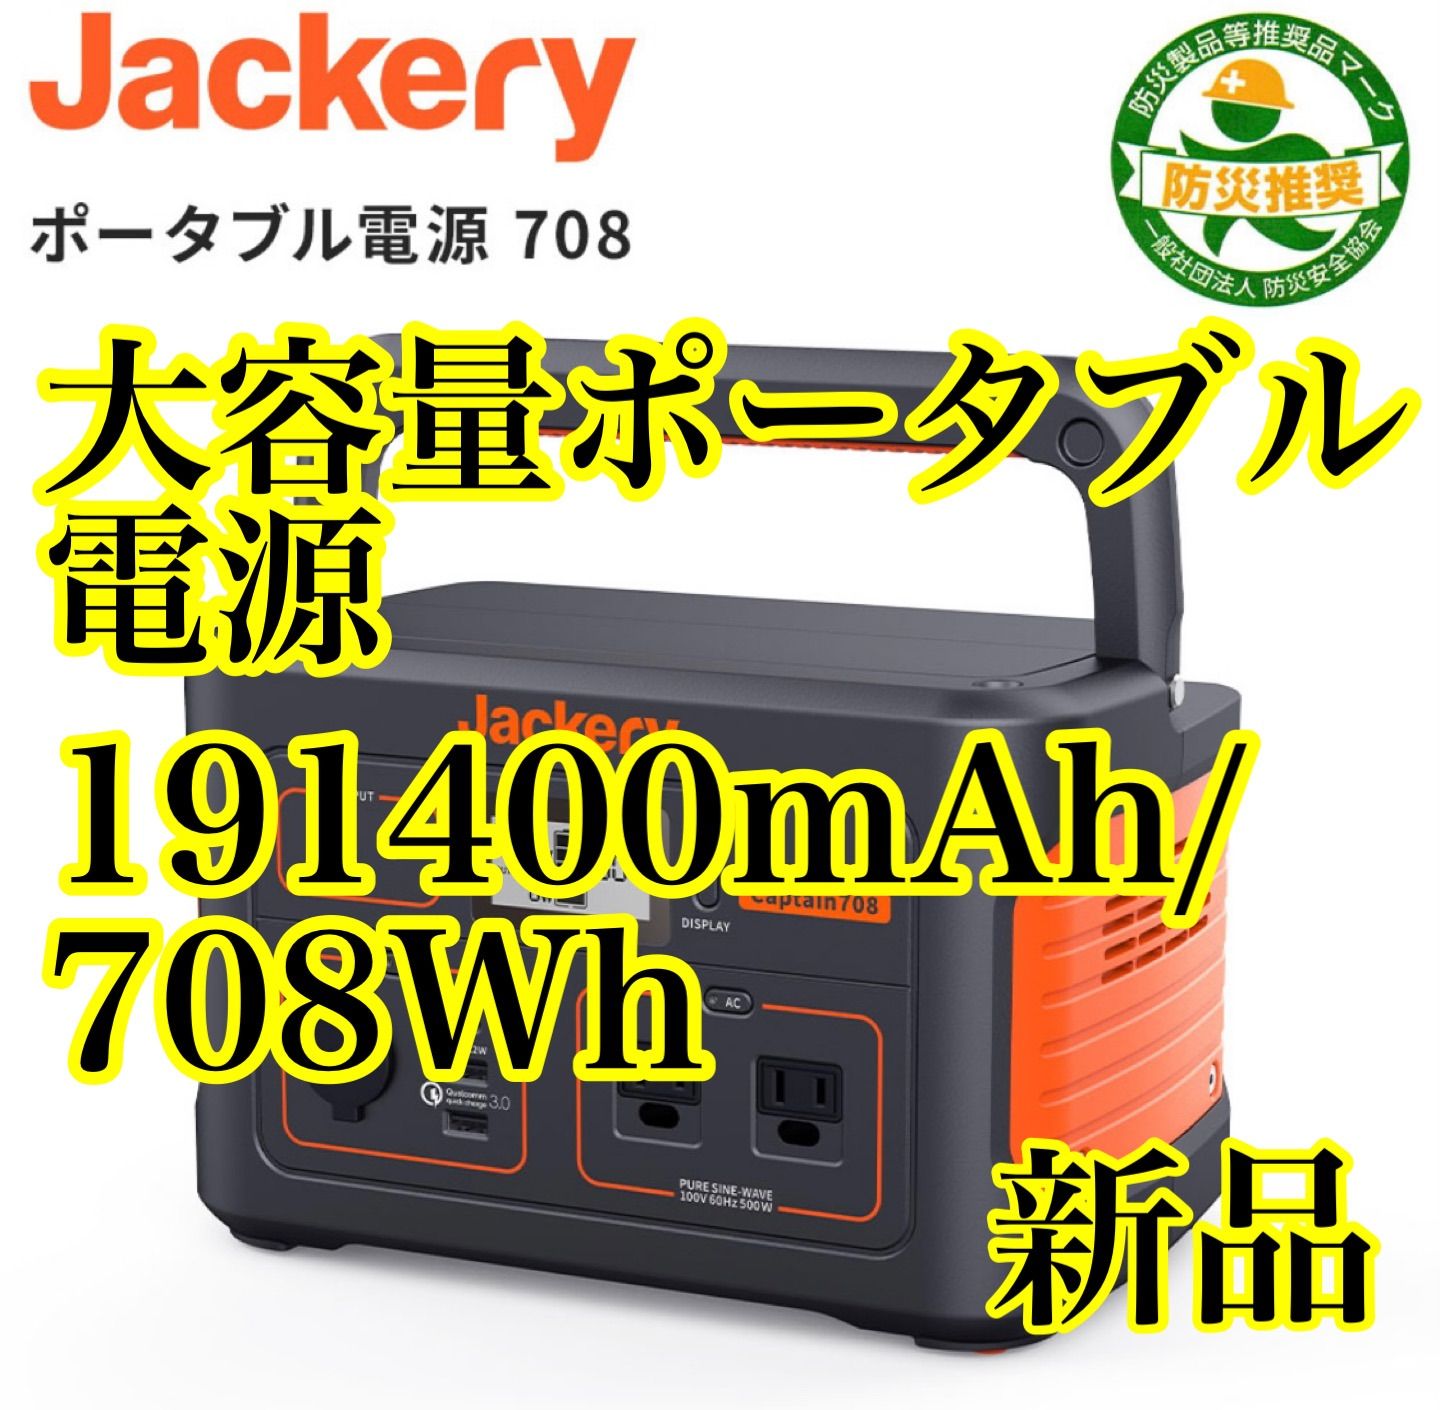 Jackery ポータブル電源708 大容量191400mAh AC(500W)